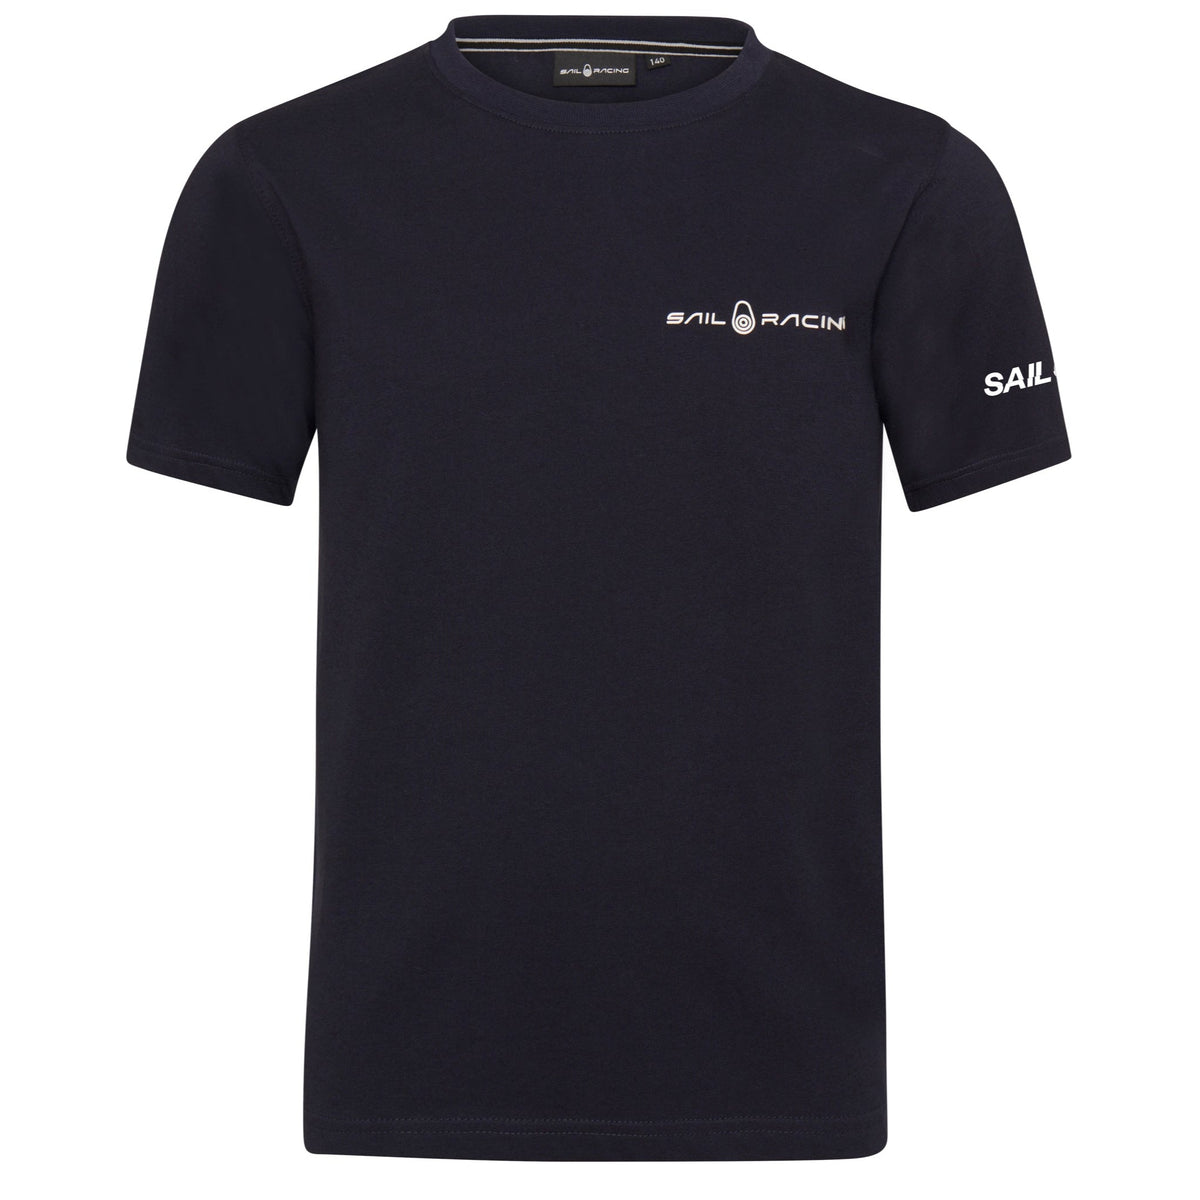 Team USA Youth Race Dark Navy T-Shirt